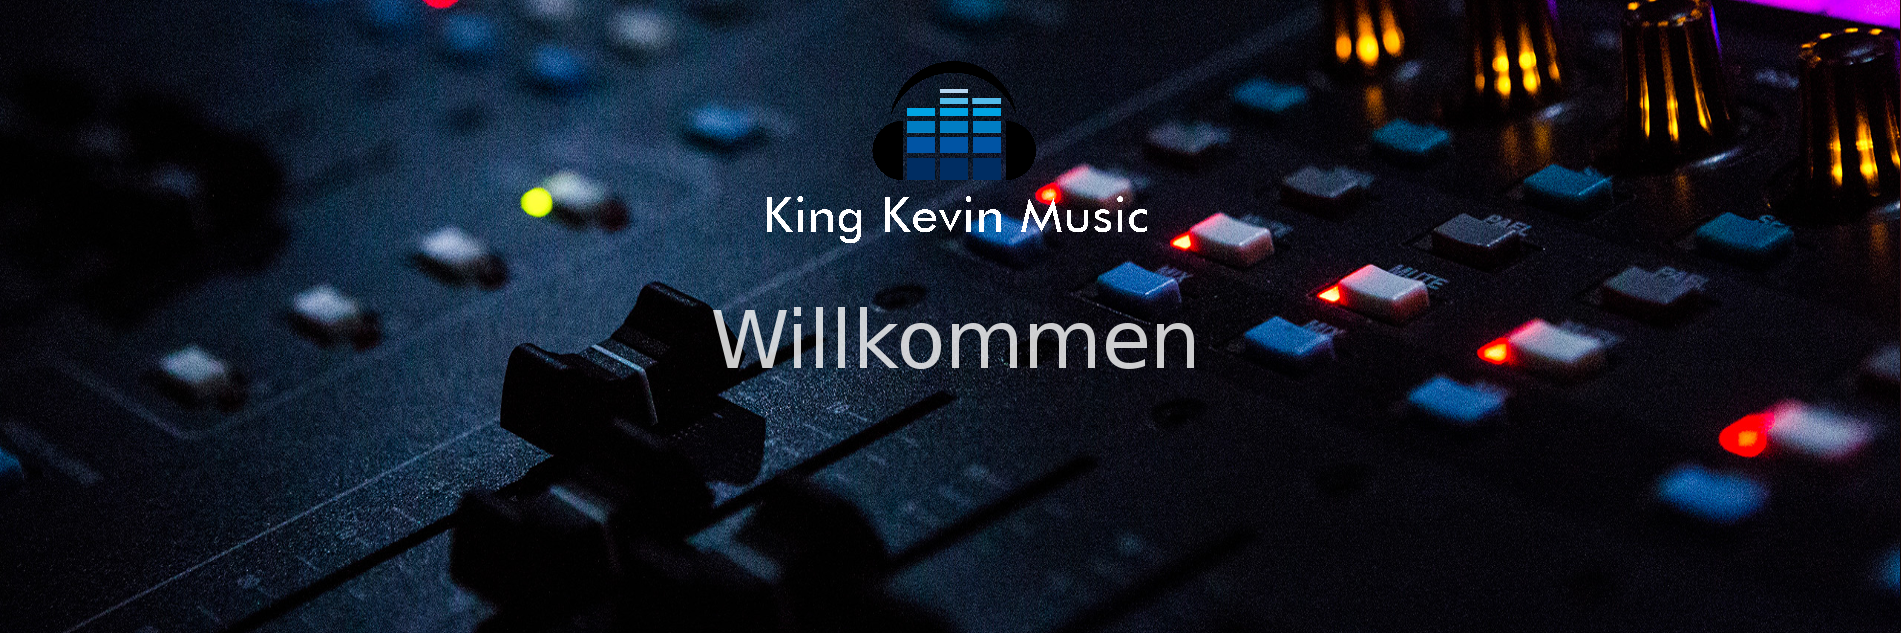 King Kevin Music Bild